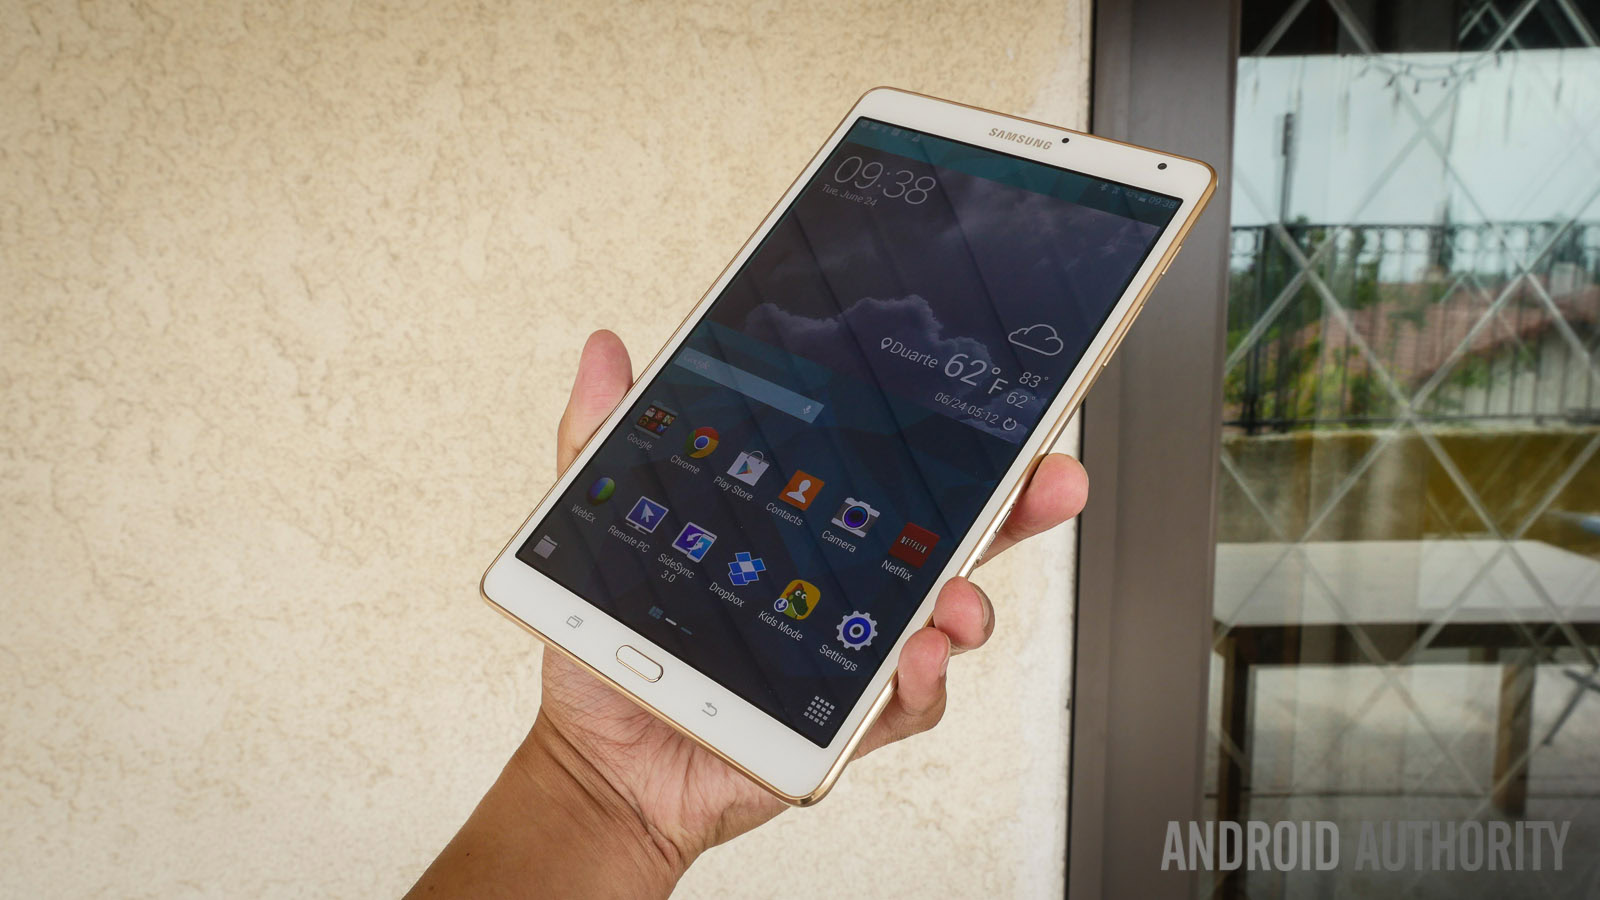 Samsung Galaxy Tab S 8.4 - Full tablet specifications